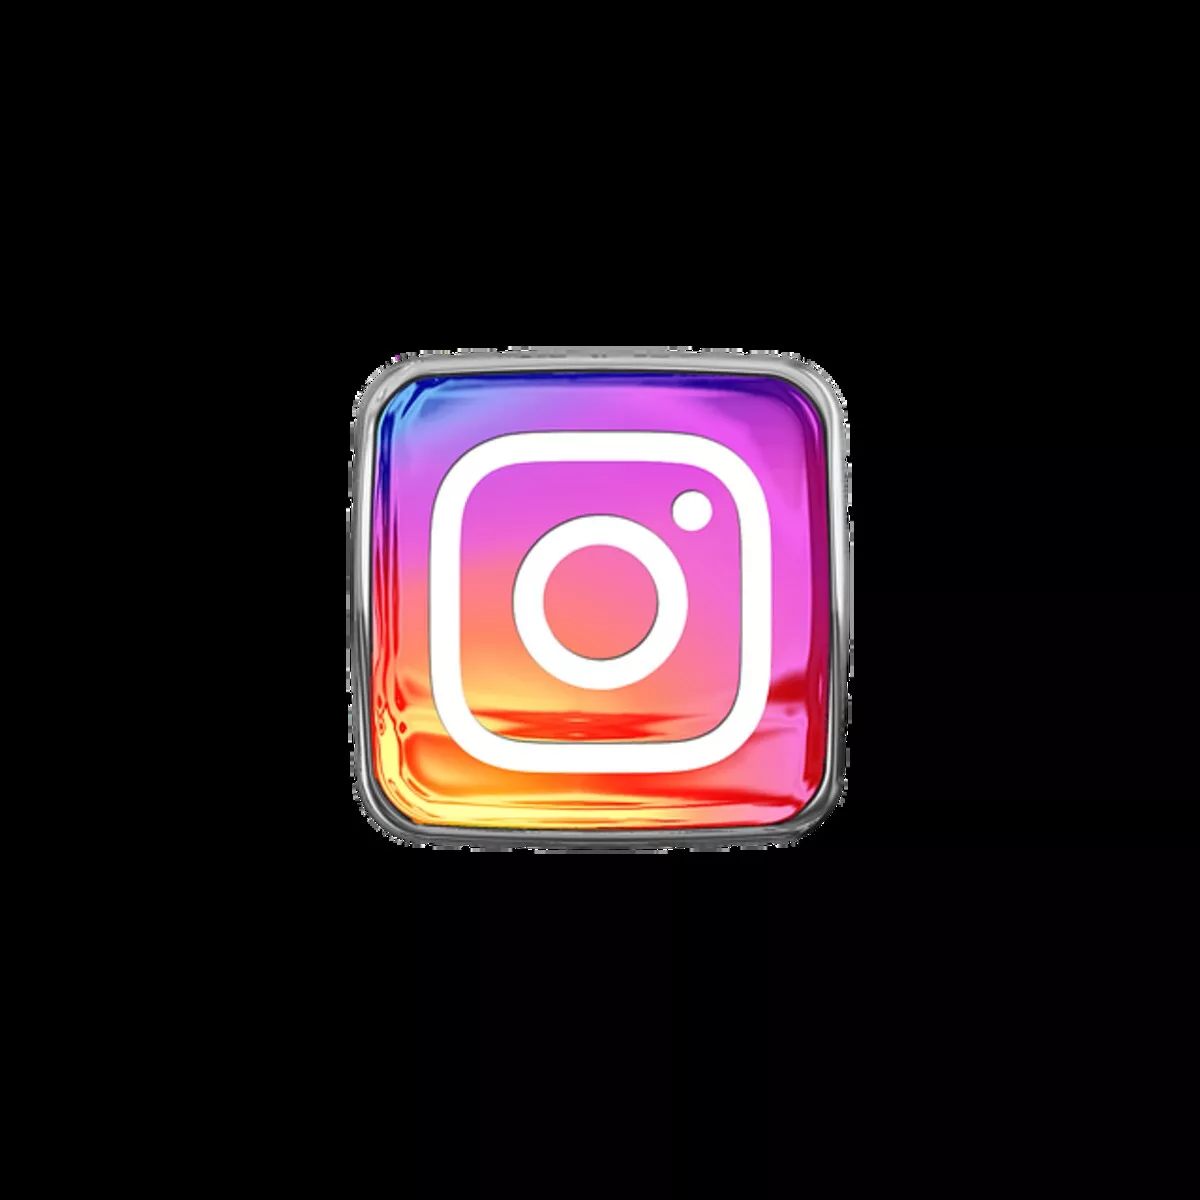 buy Instagram followers Australia